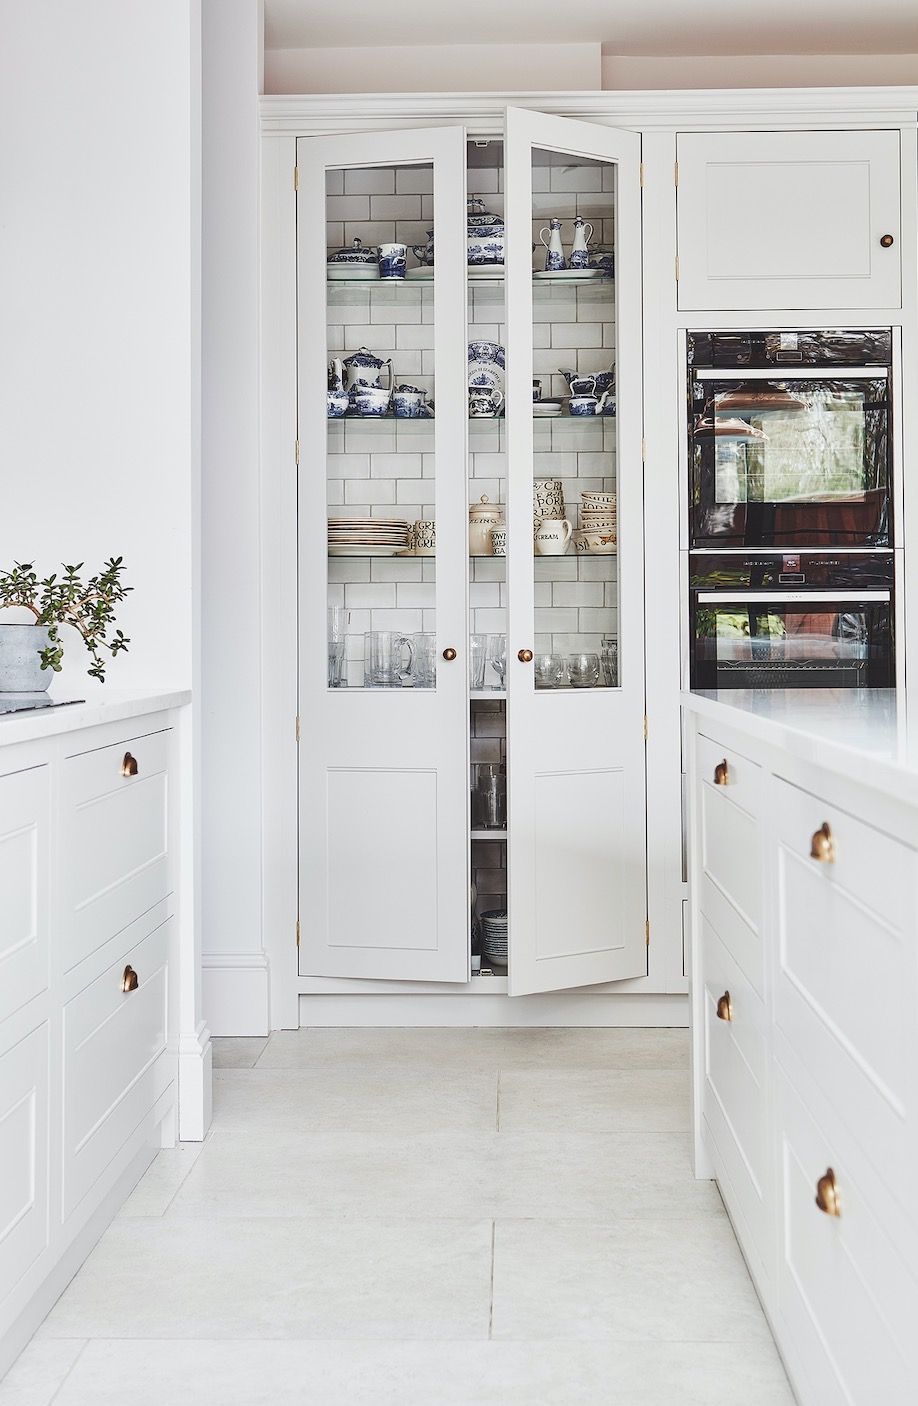 Blakes London, white kitchen cabinets